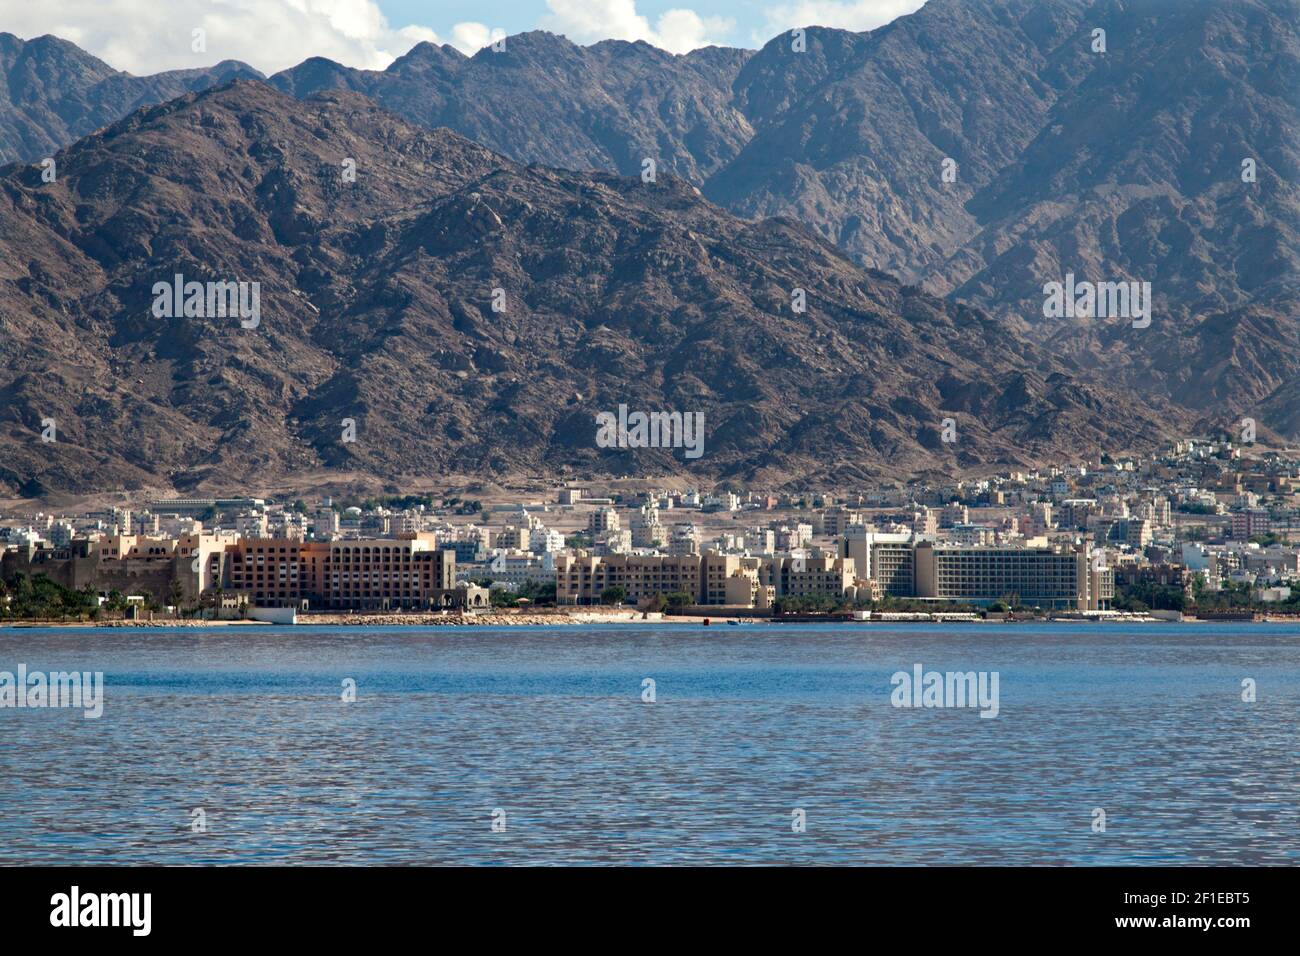 Aqaba, Jordan cityscape as seen from the Red Sea Stock Photo